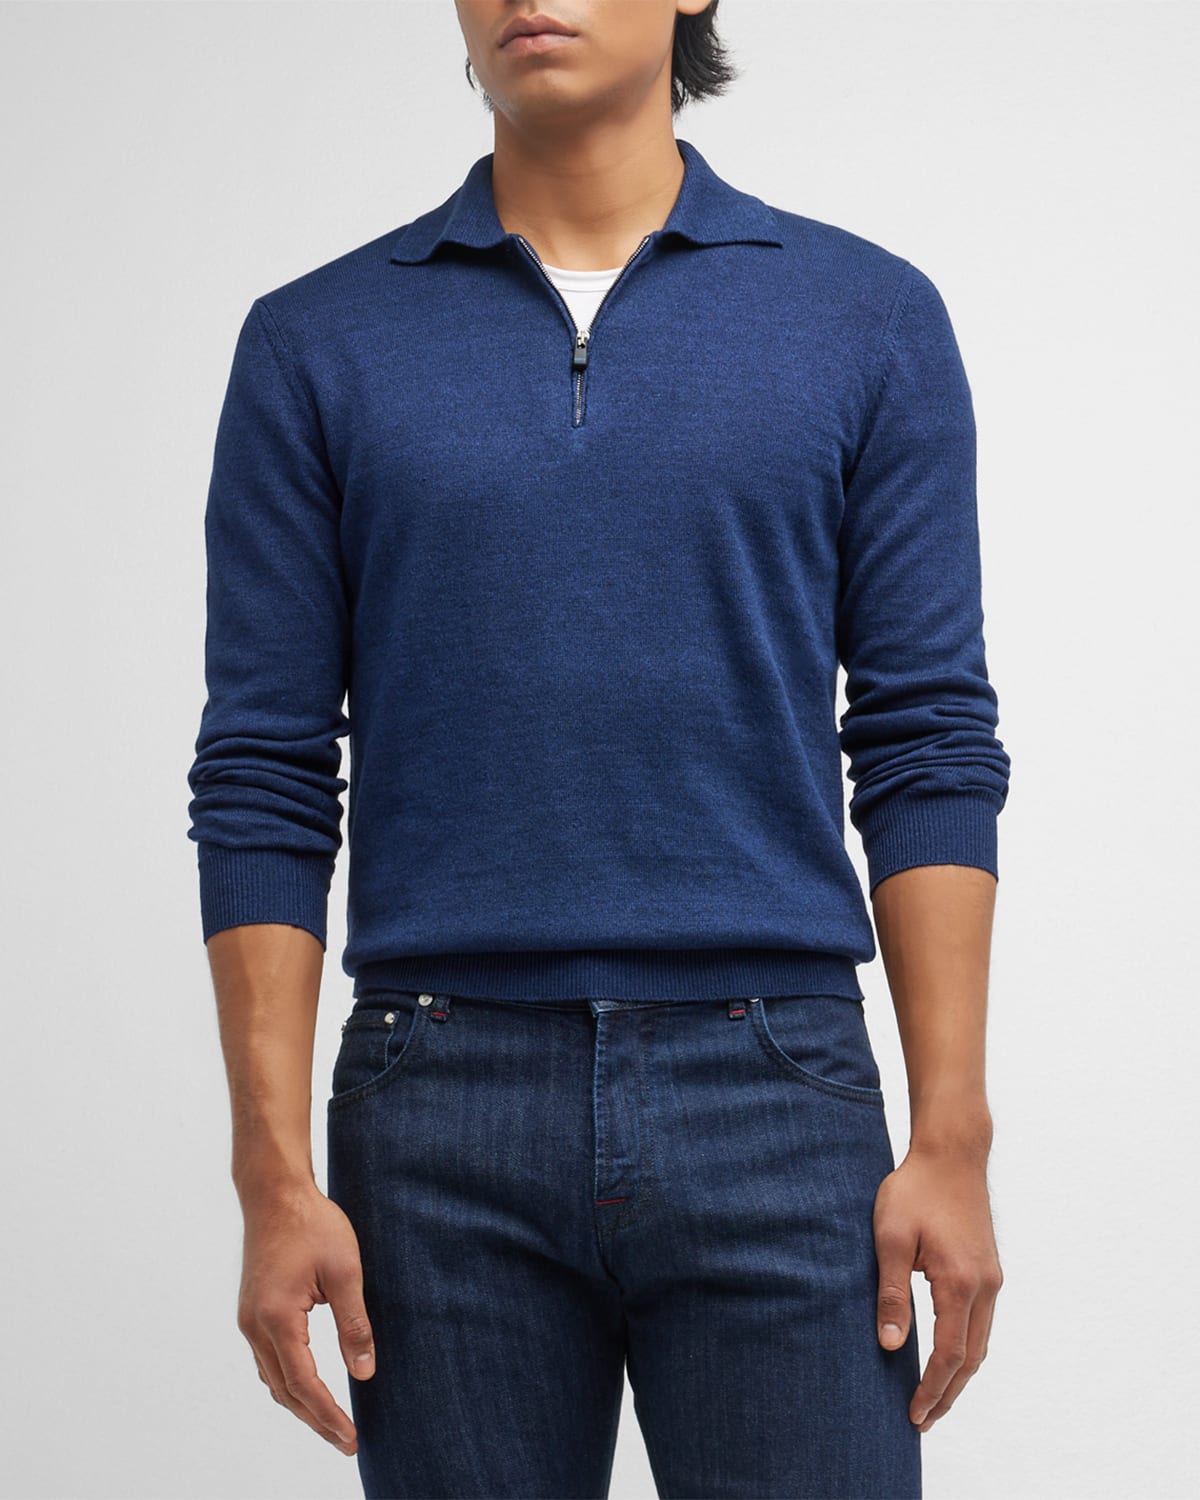 KNT Men's Navy Quarter-Zip Polo Knit Shirt